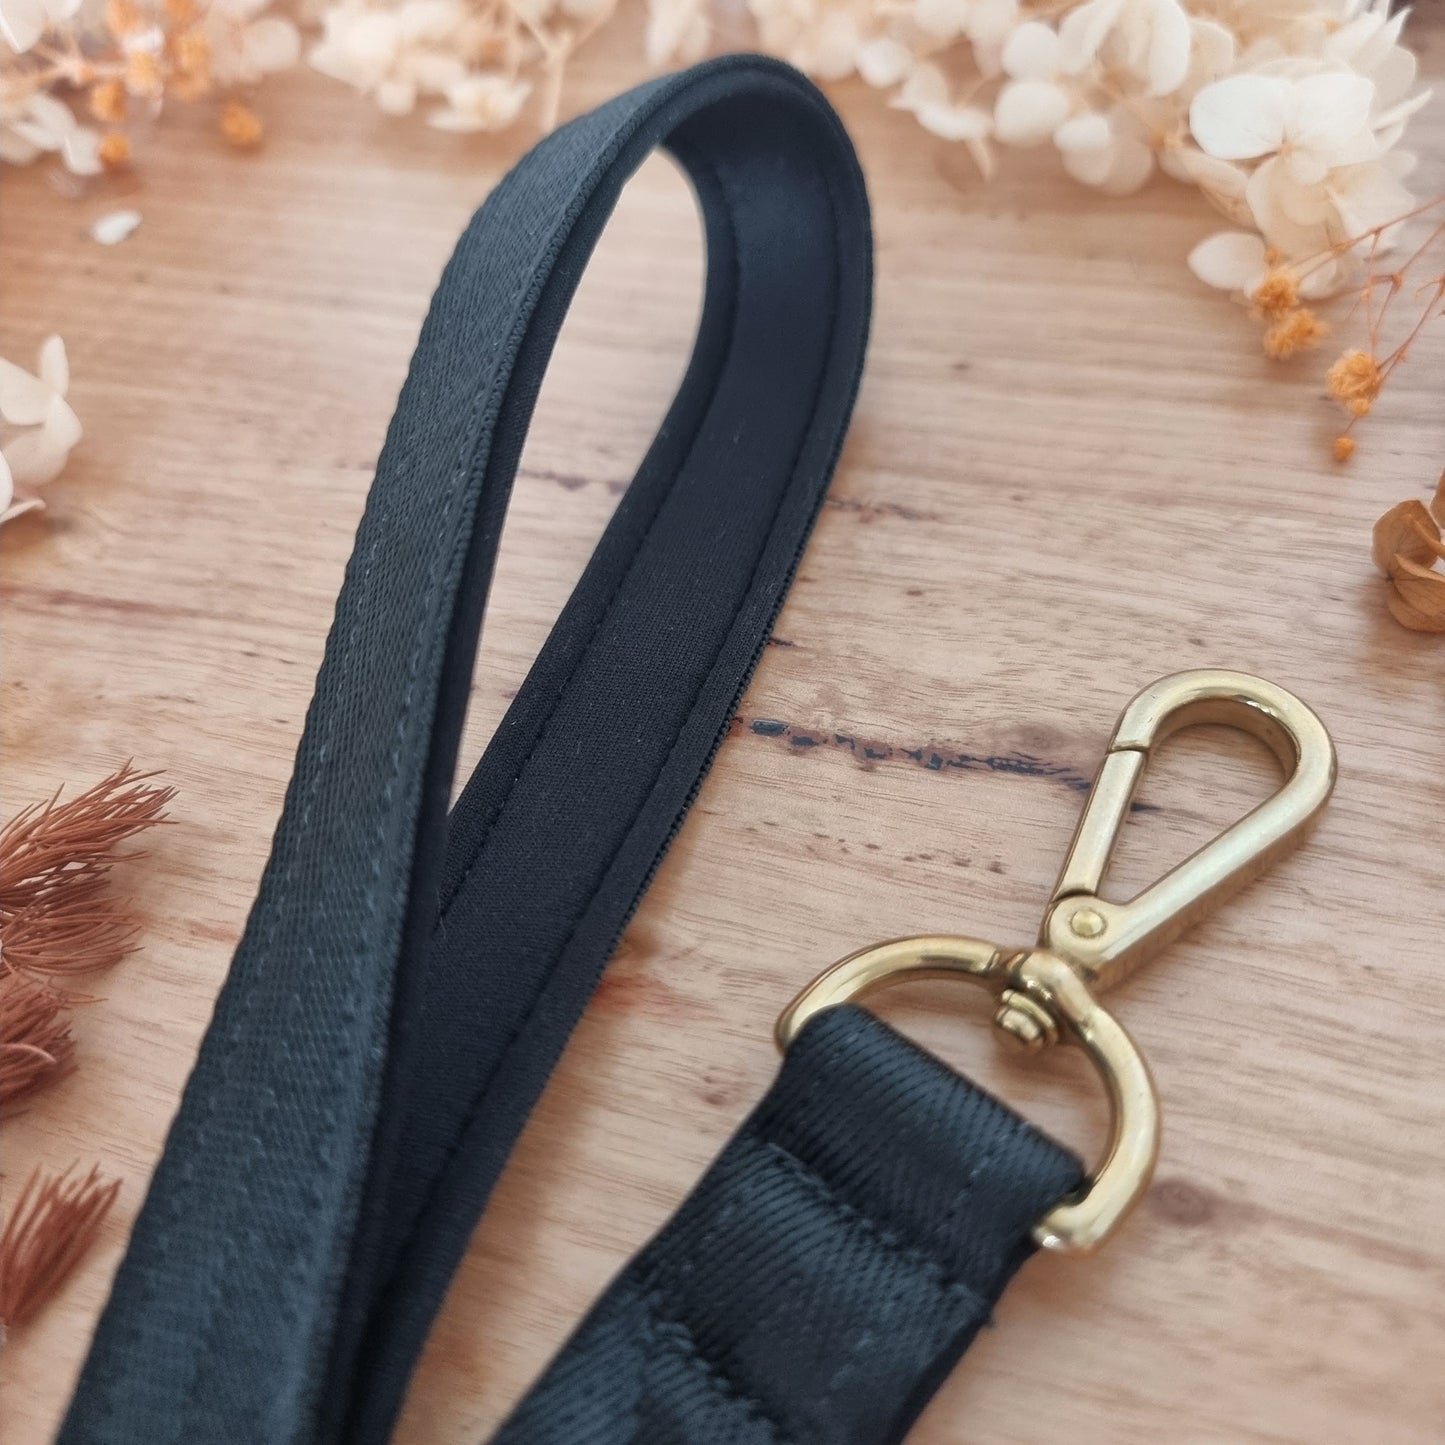 Black dog leash - neoprene padded